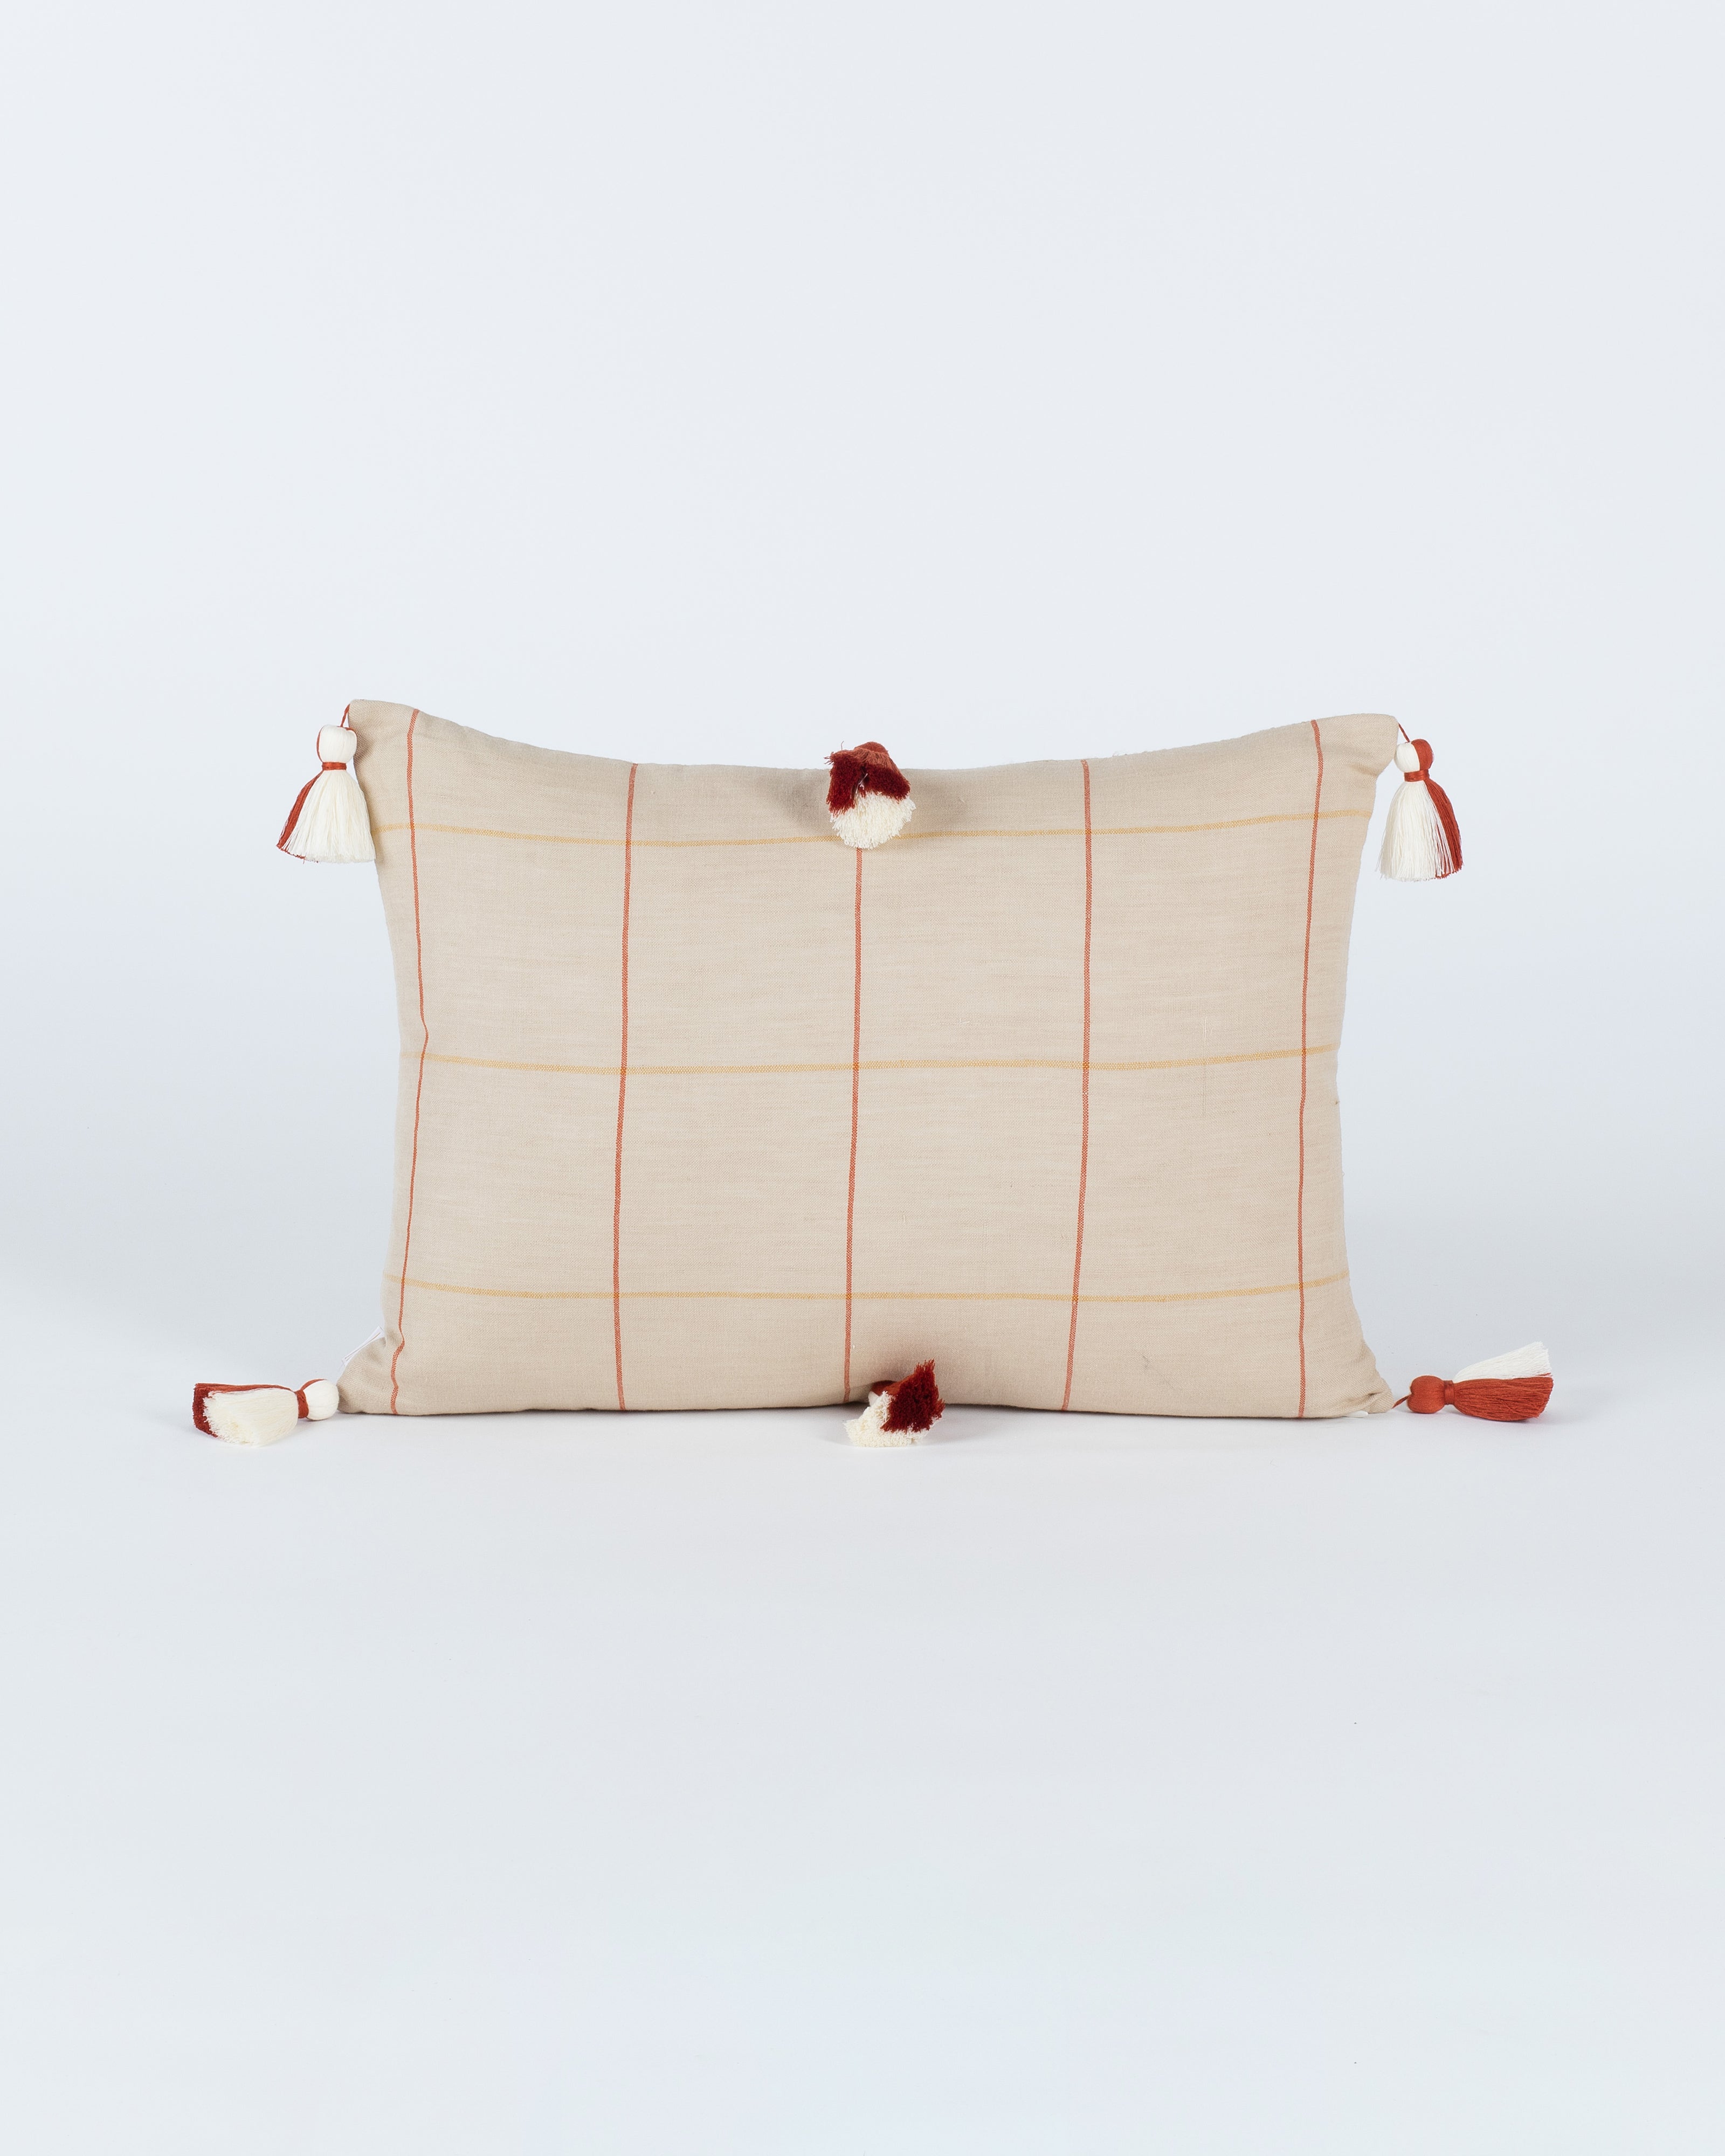 Mandolin Extra Weft Cotton Linen Cushion Cover